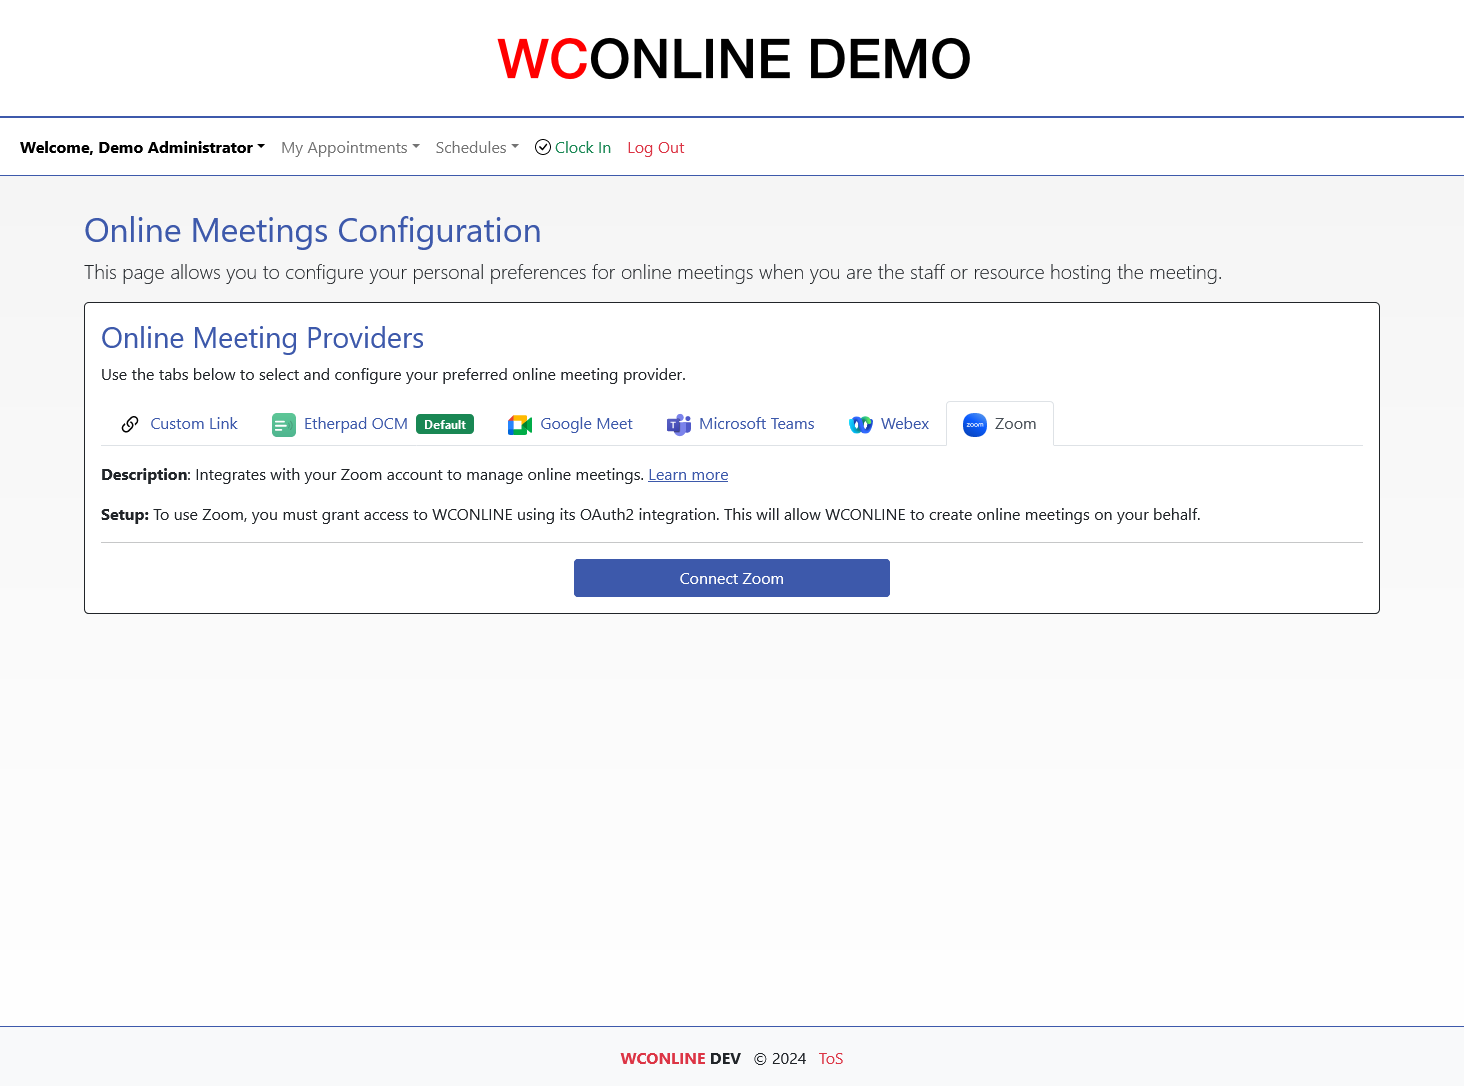 Online Meetings Configuration